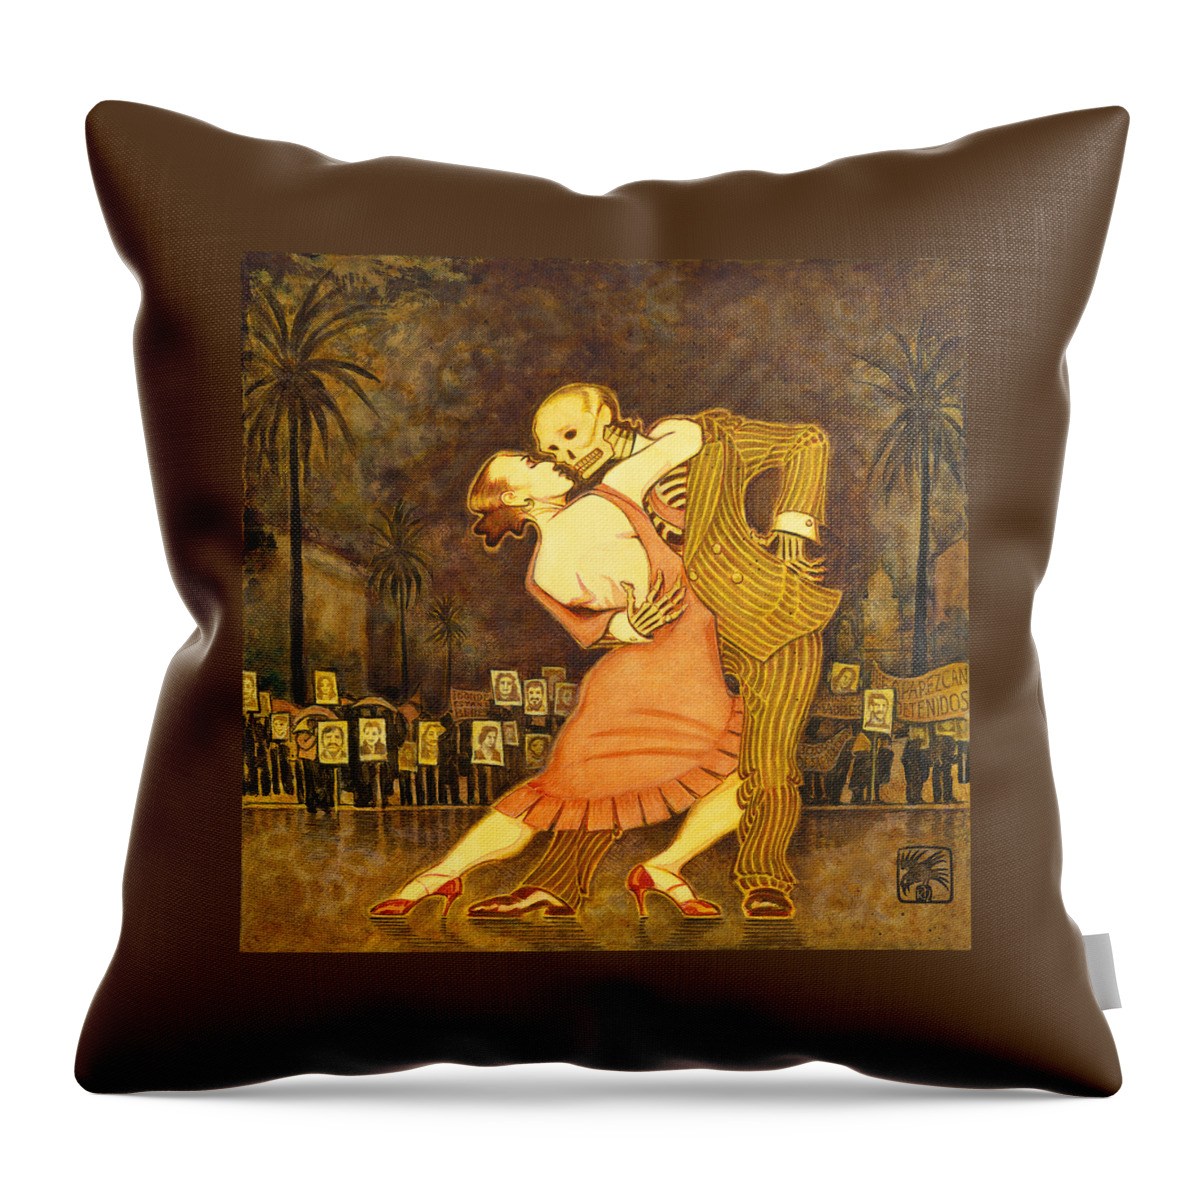 Abuelas De Plaza De Mayo Throw Pillow featuring the painting Tango en la Plaza de Mayo by Ruth Hooper